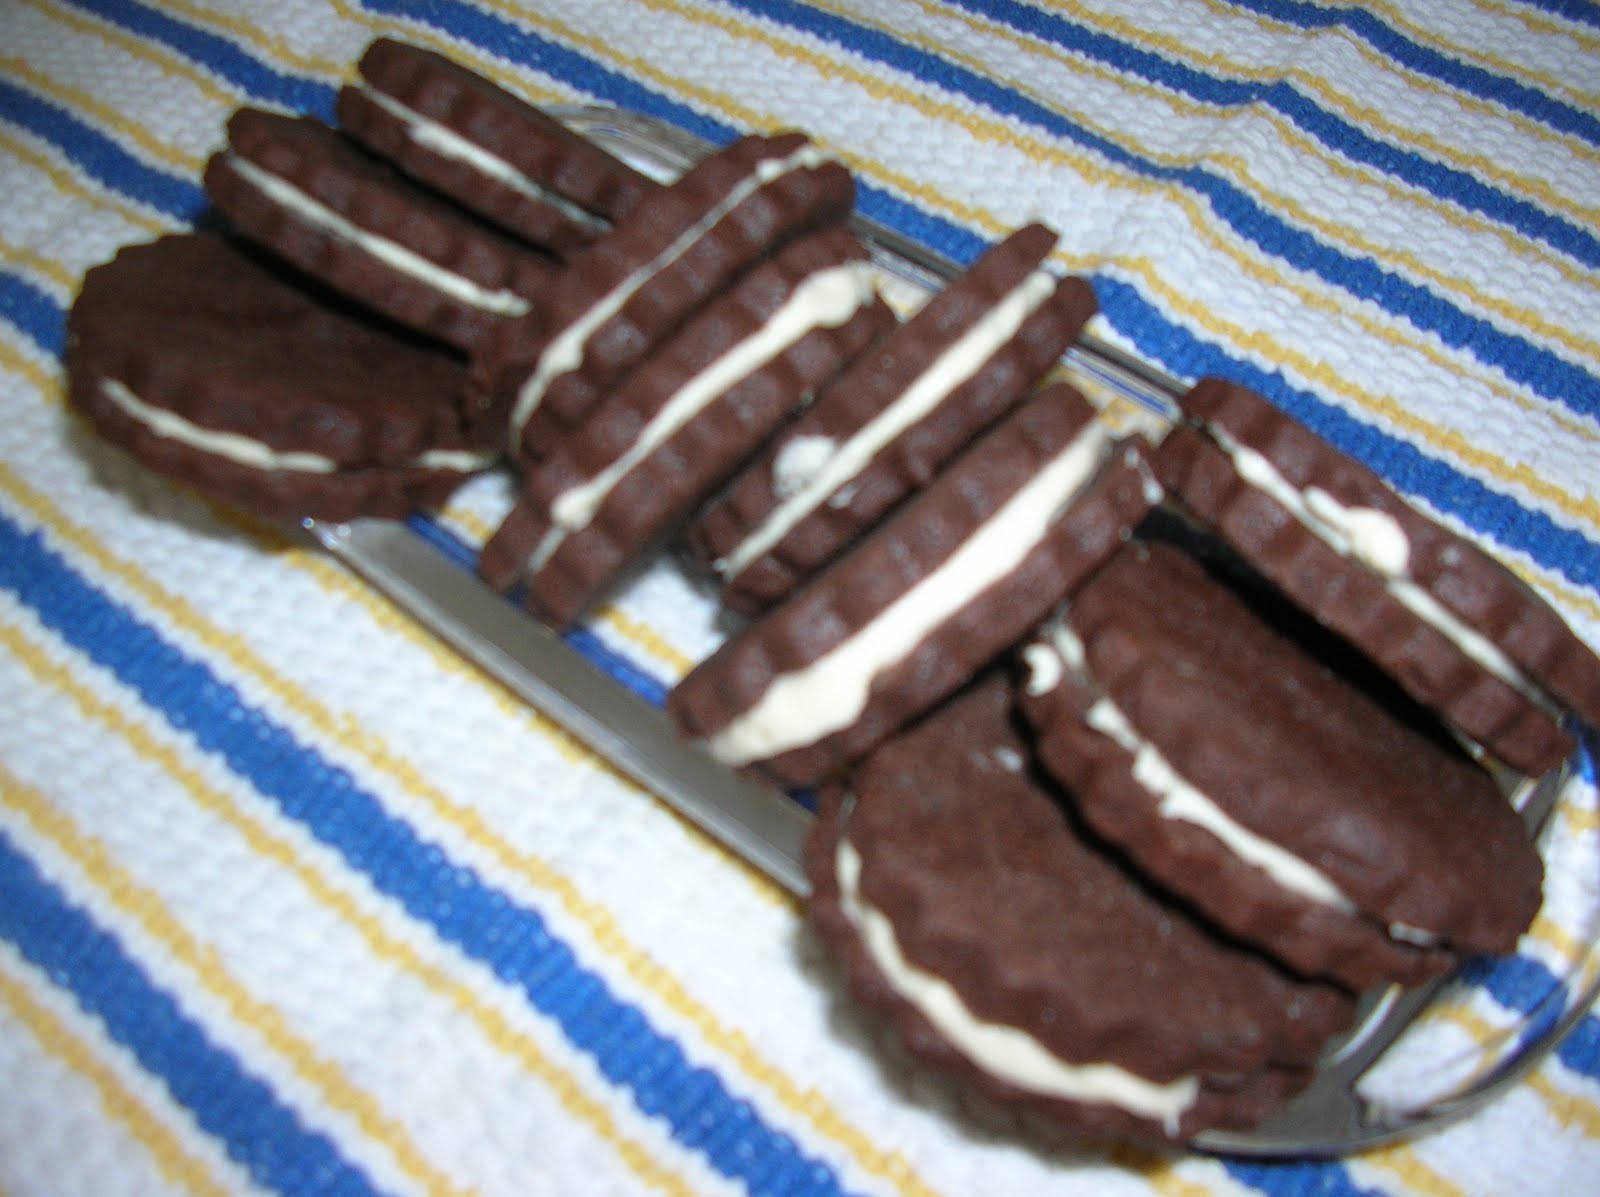 Amy cookies